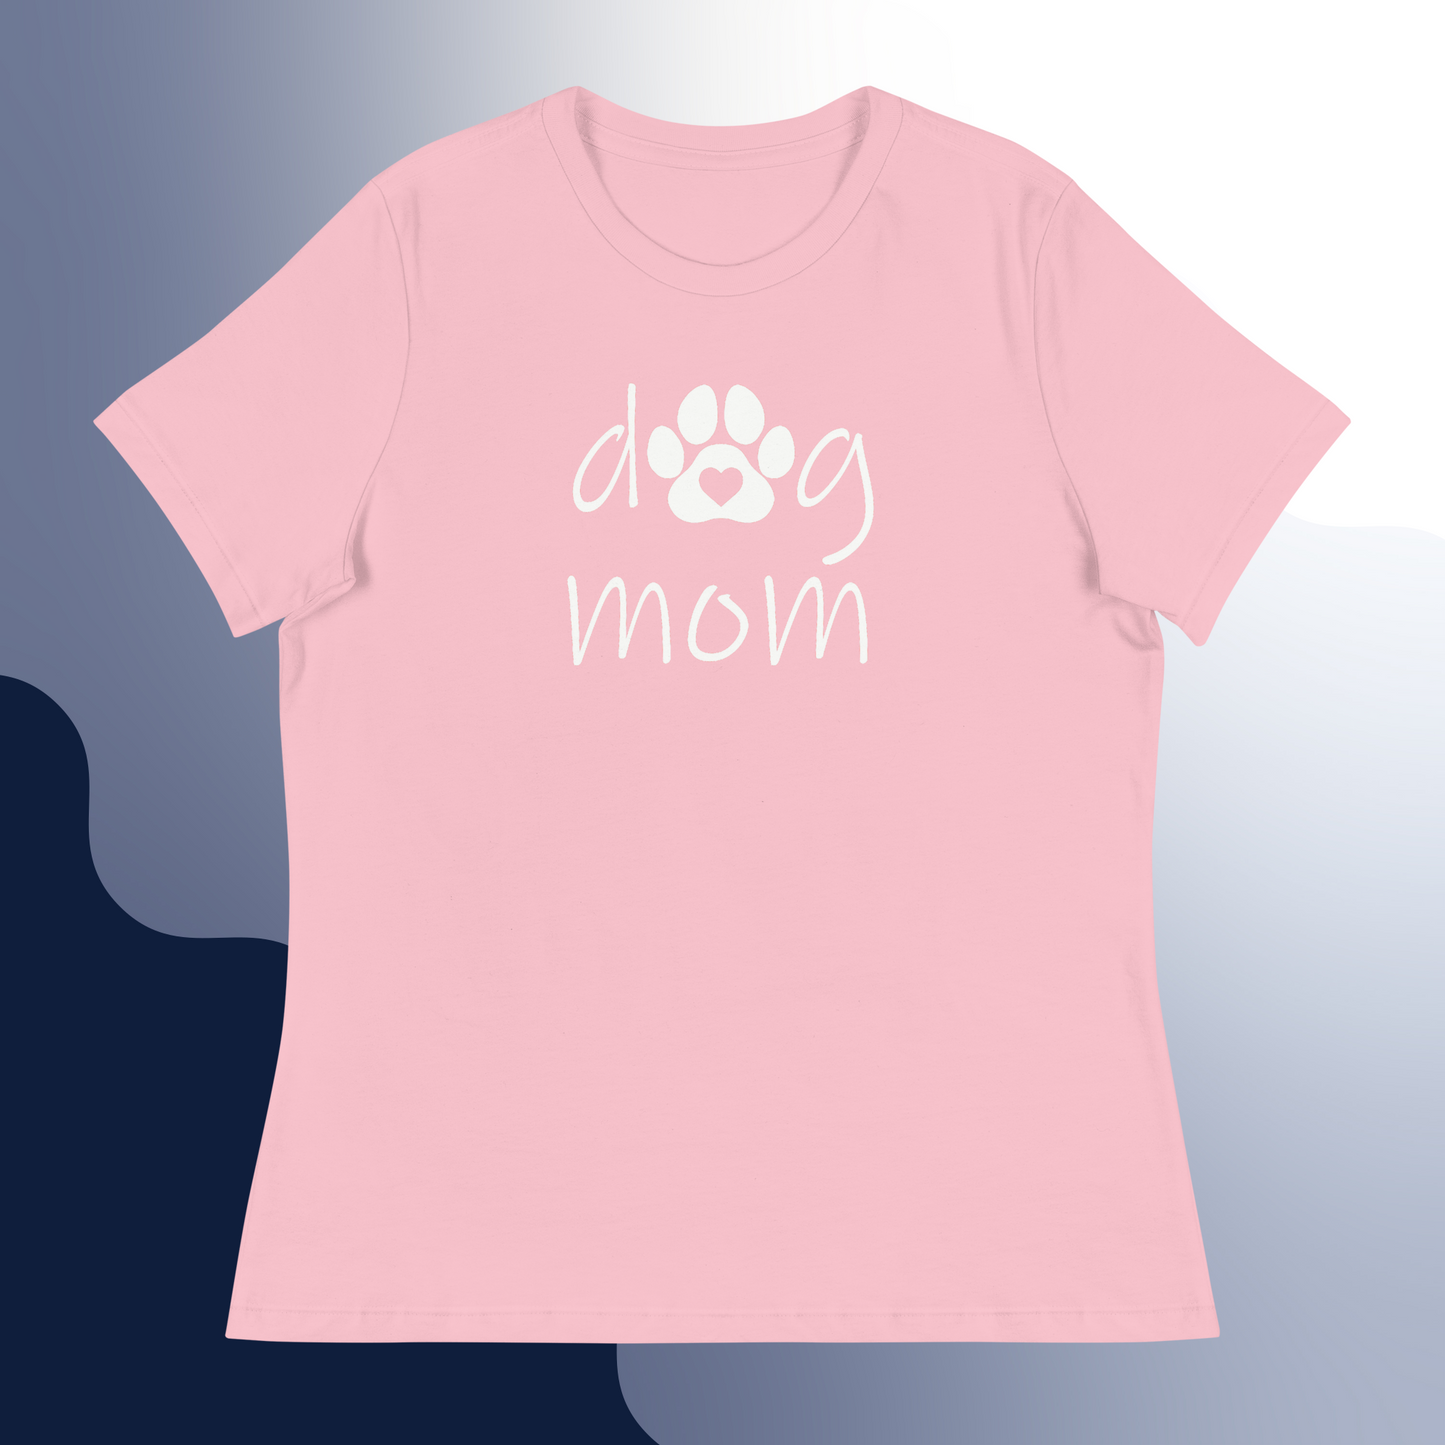 Dog Mom Women's Relaxed T-Shirt